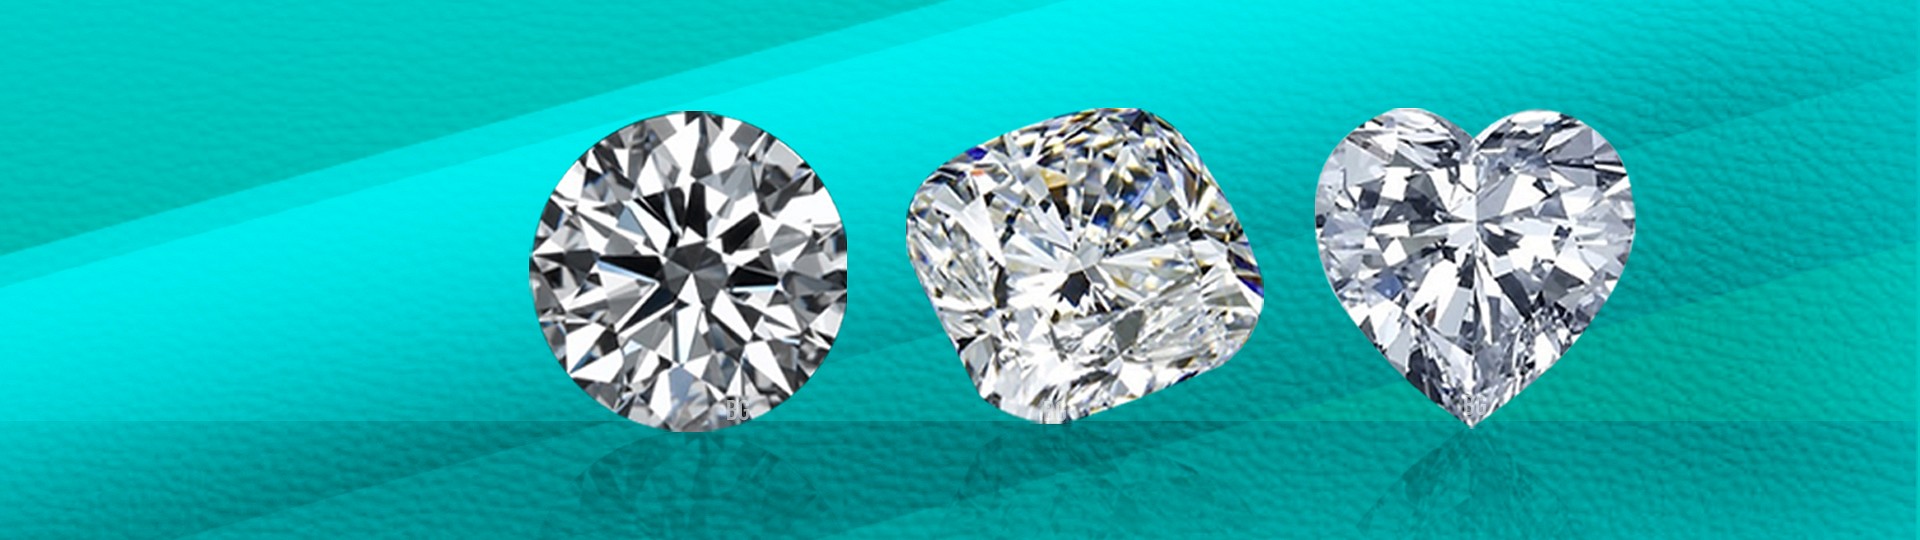 Exclusive Bidsquare GIA Diamonds Day 2 by Bid Global International Auctioneers LLC